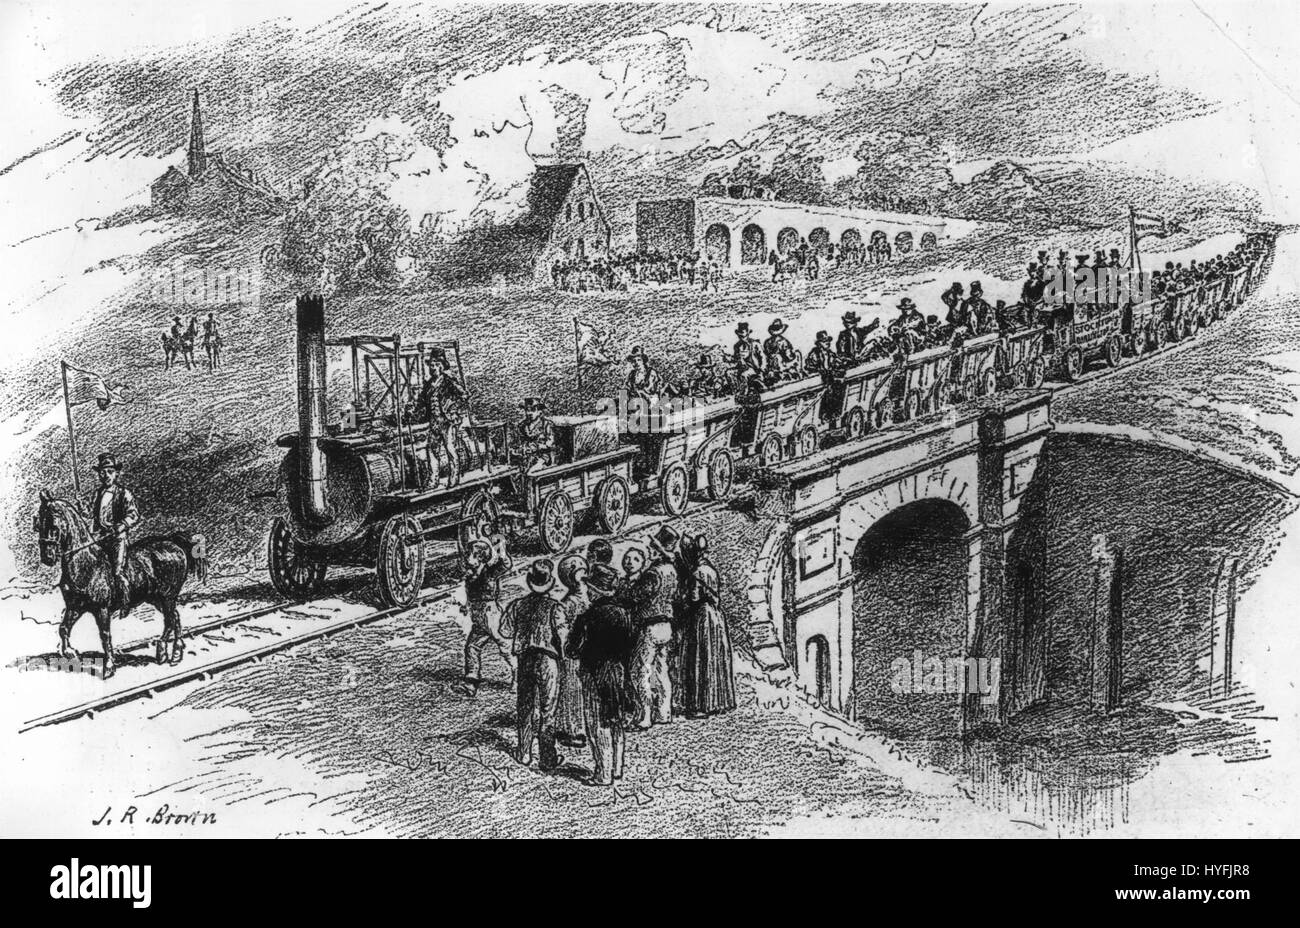 Stockton & Darlington Railway (Braun über Gettyimages) Stockfoto